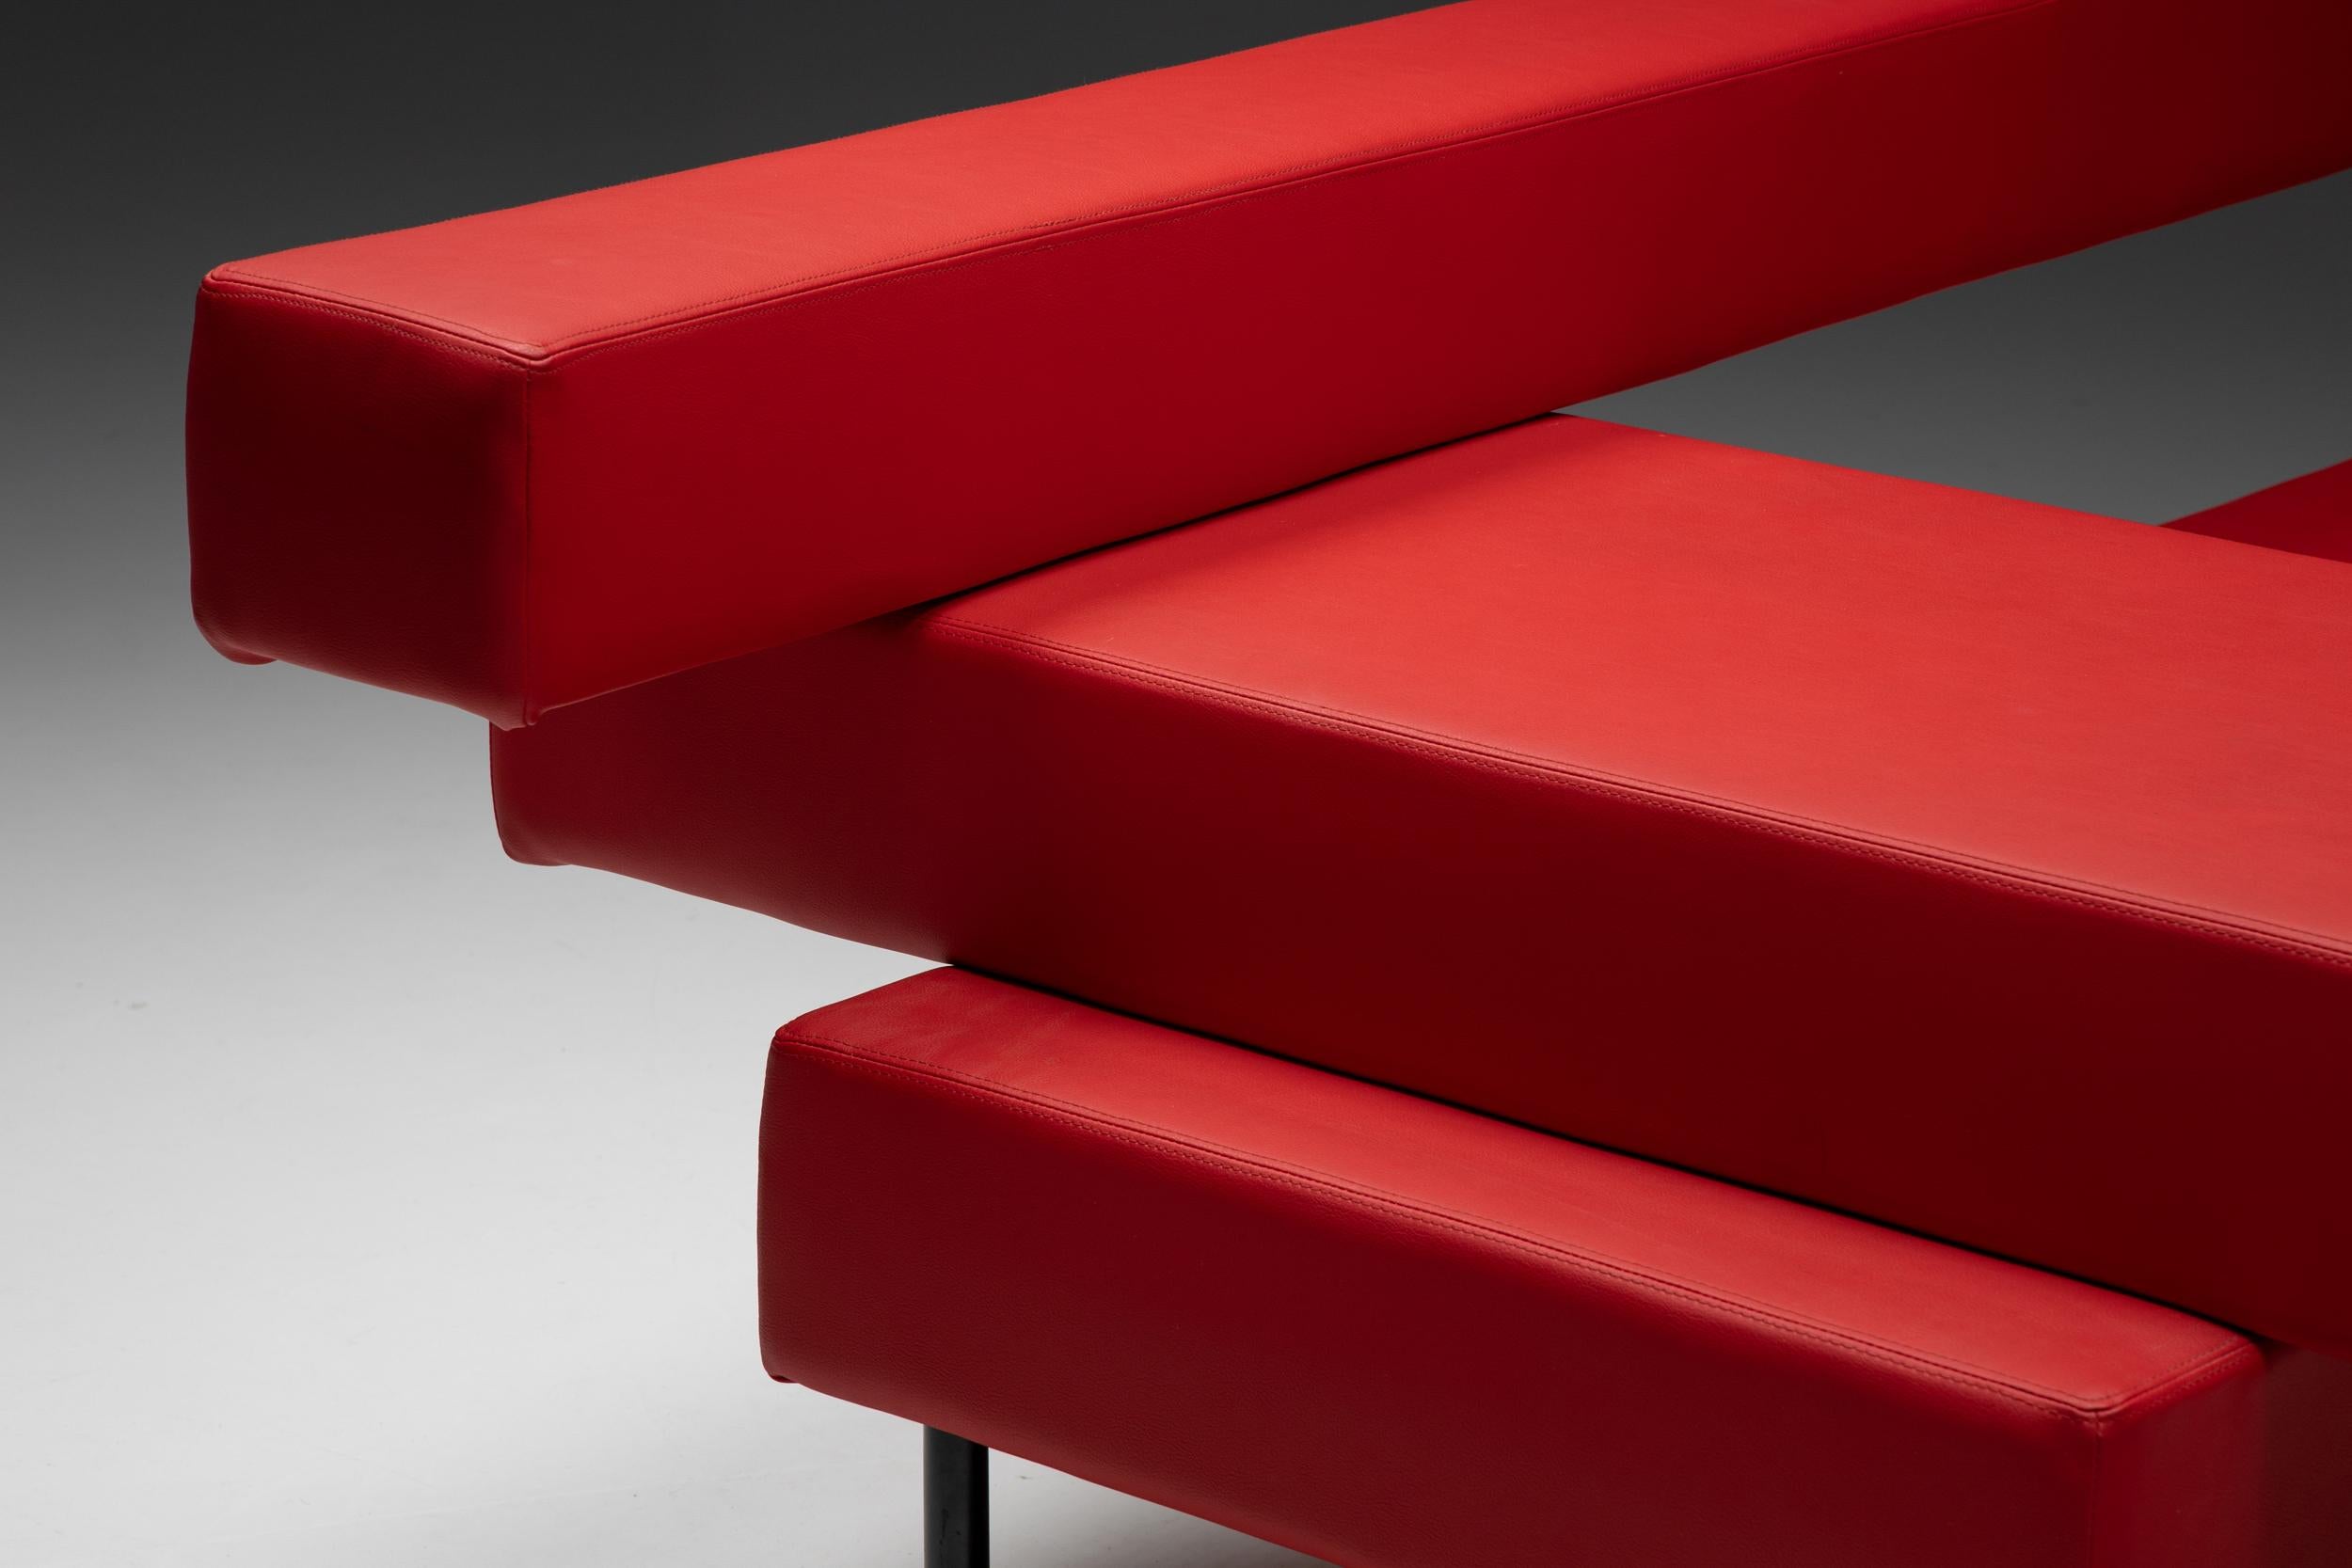 Postmodern Rectangular Red Architectural Sofa, Belgian Design, Prototype, 2000's For Sale 1